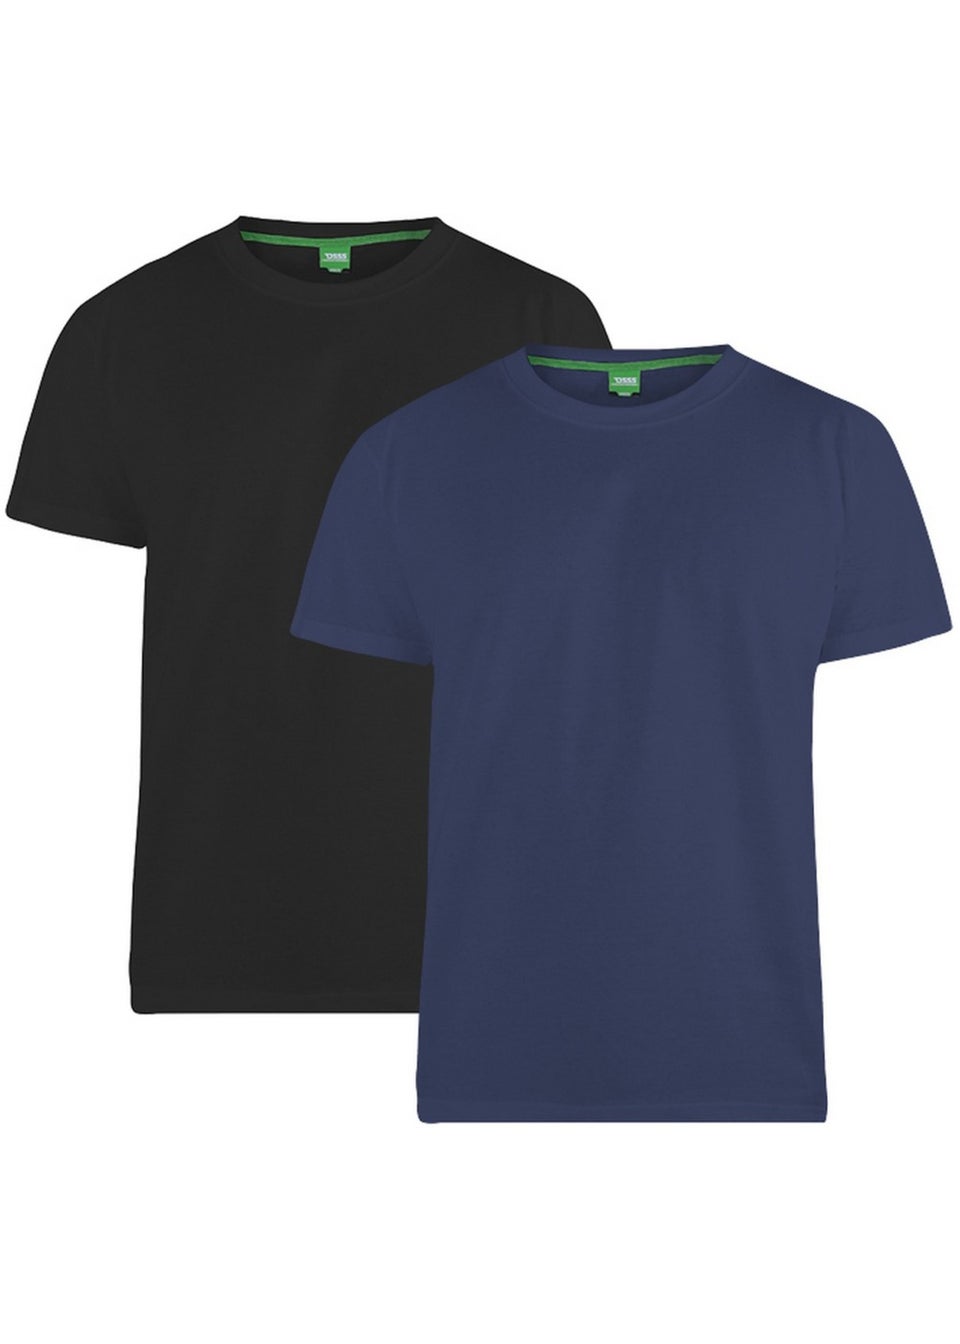 Duke Black/Navy Fenton Round Neck T-shirts (Pack of 2)